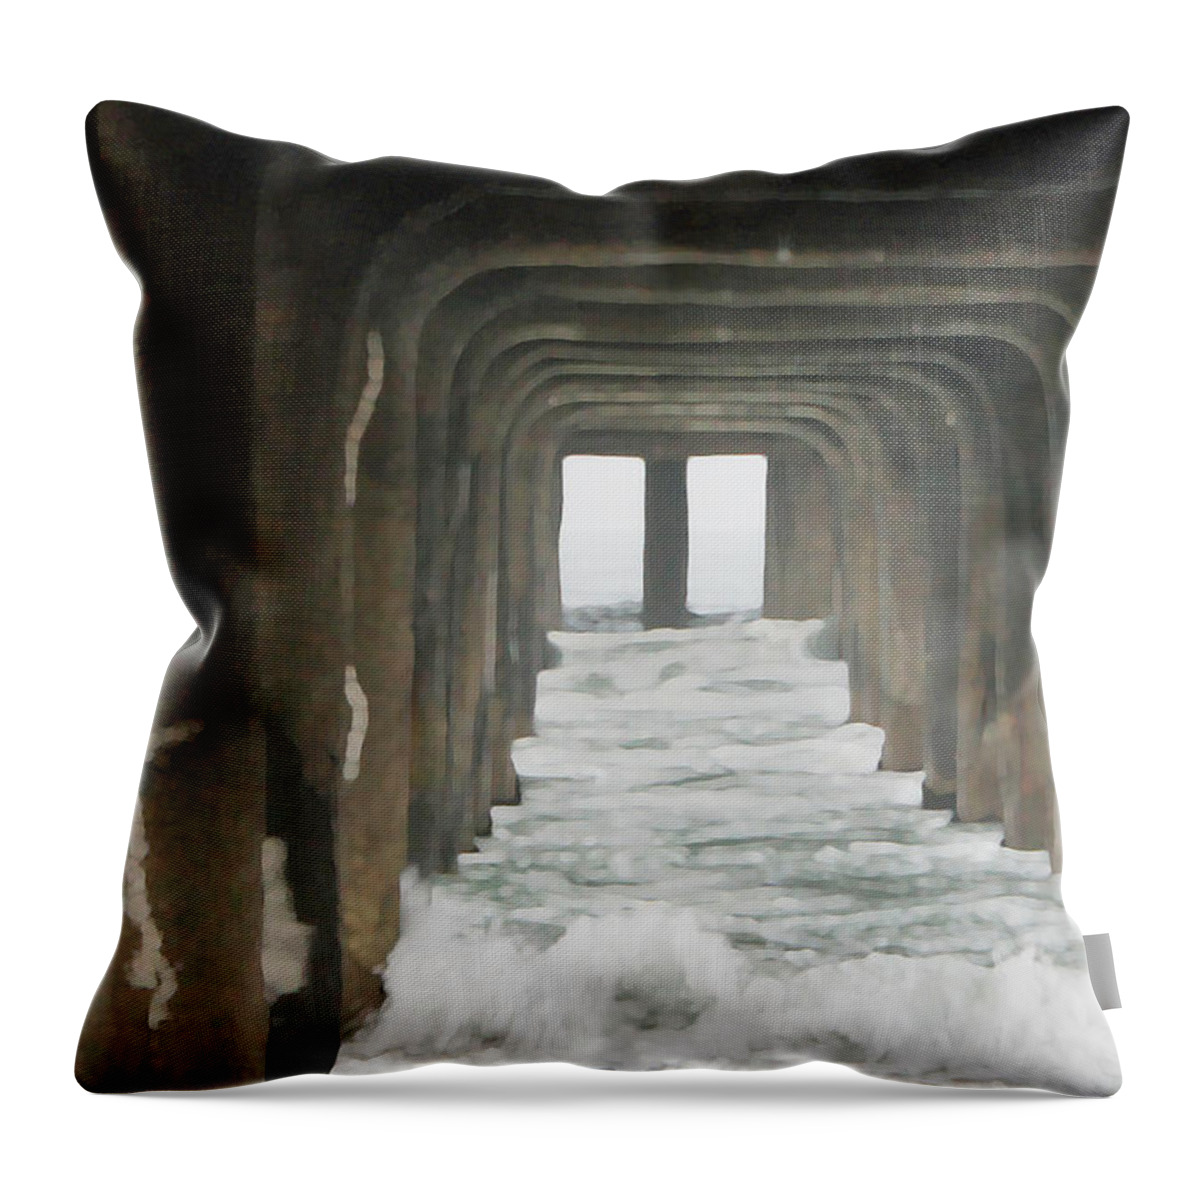 Ocean Water Throw Pillow featuring the photograph Under The Pier by Gilbert Artiaga